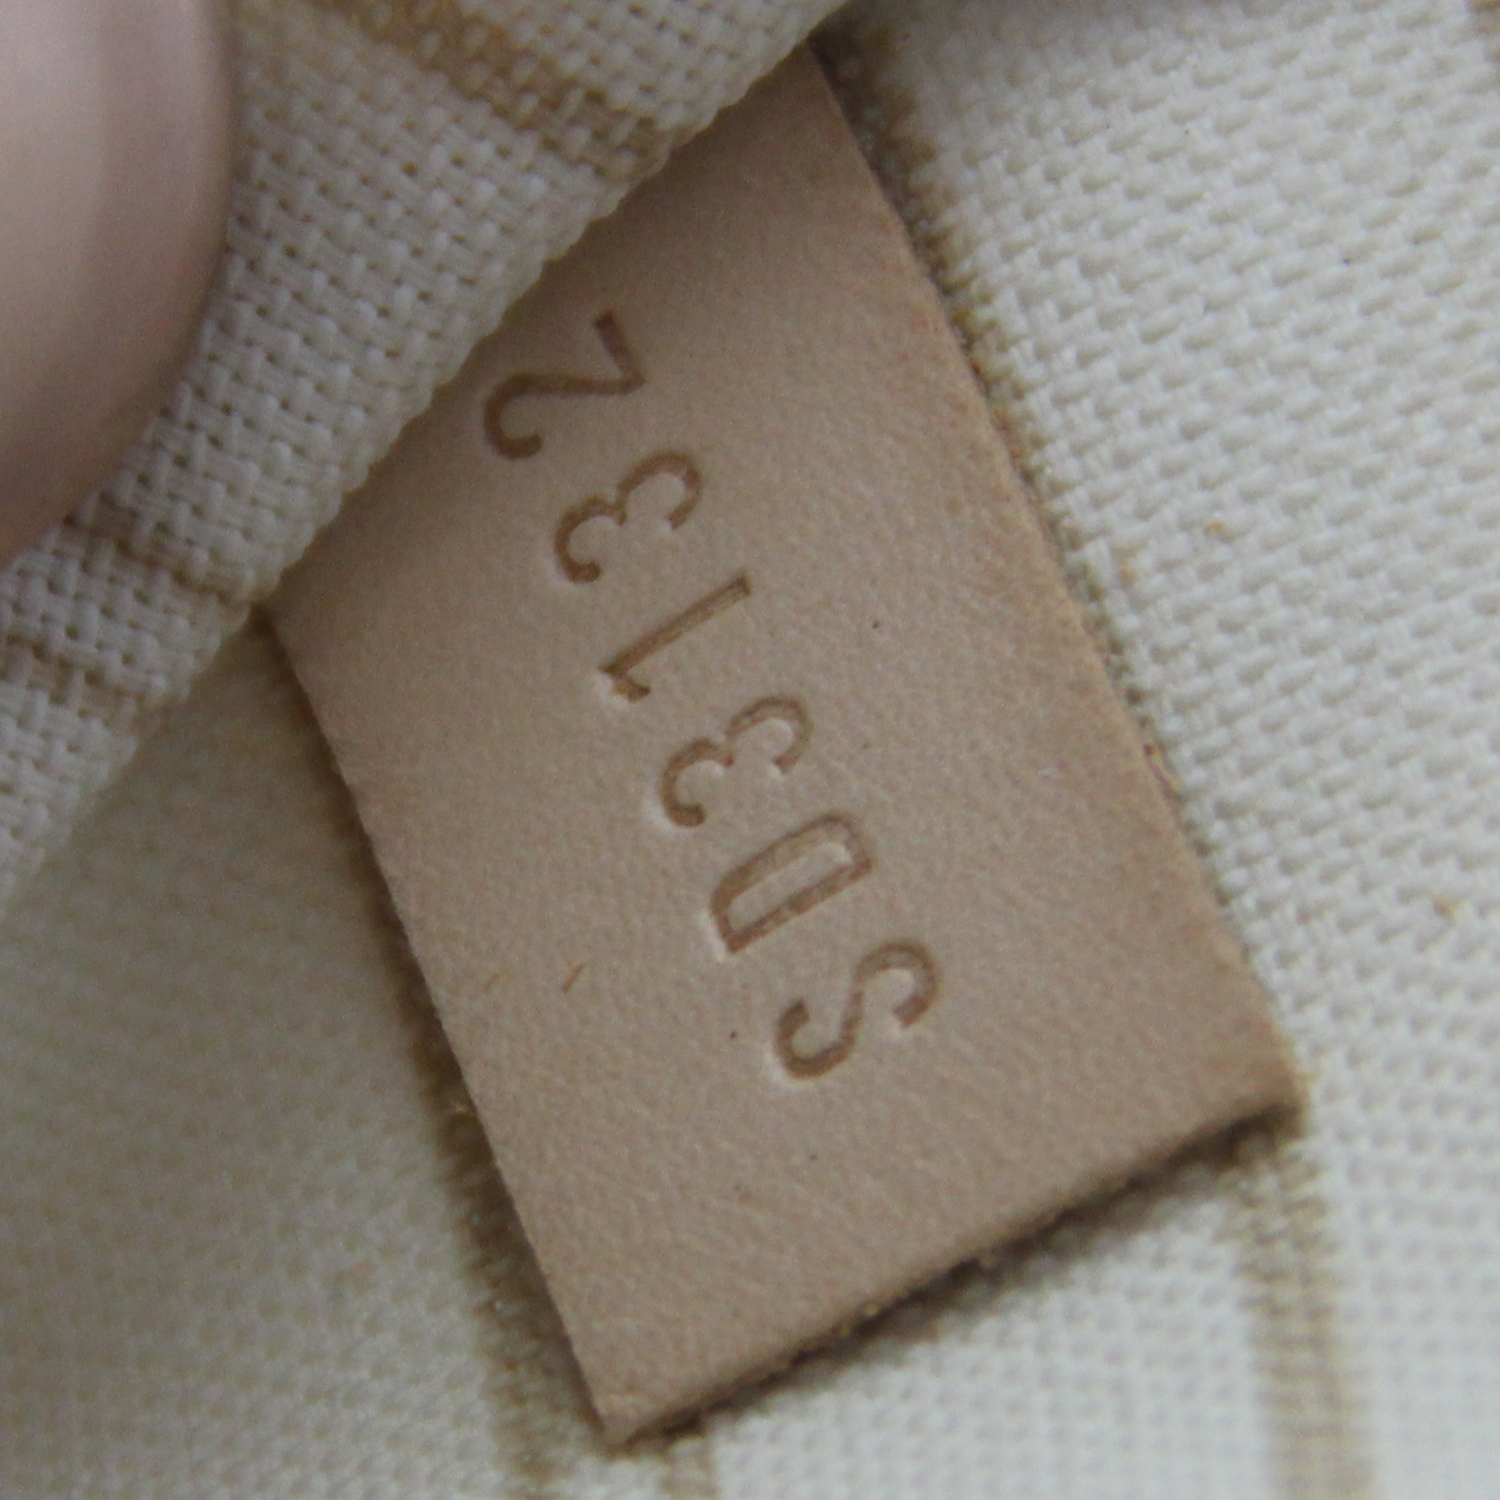 Louis Vuitton date code